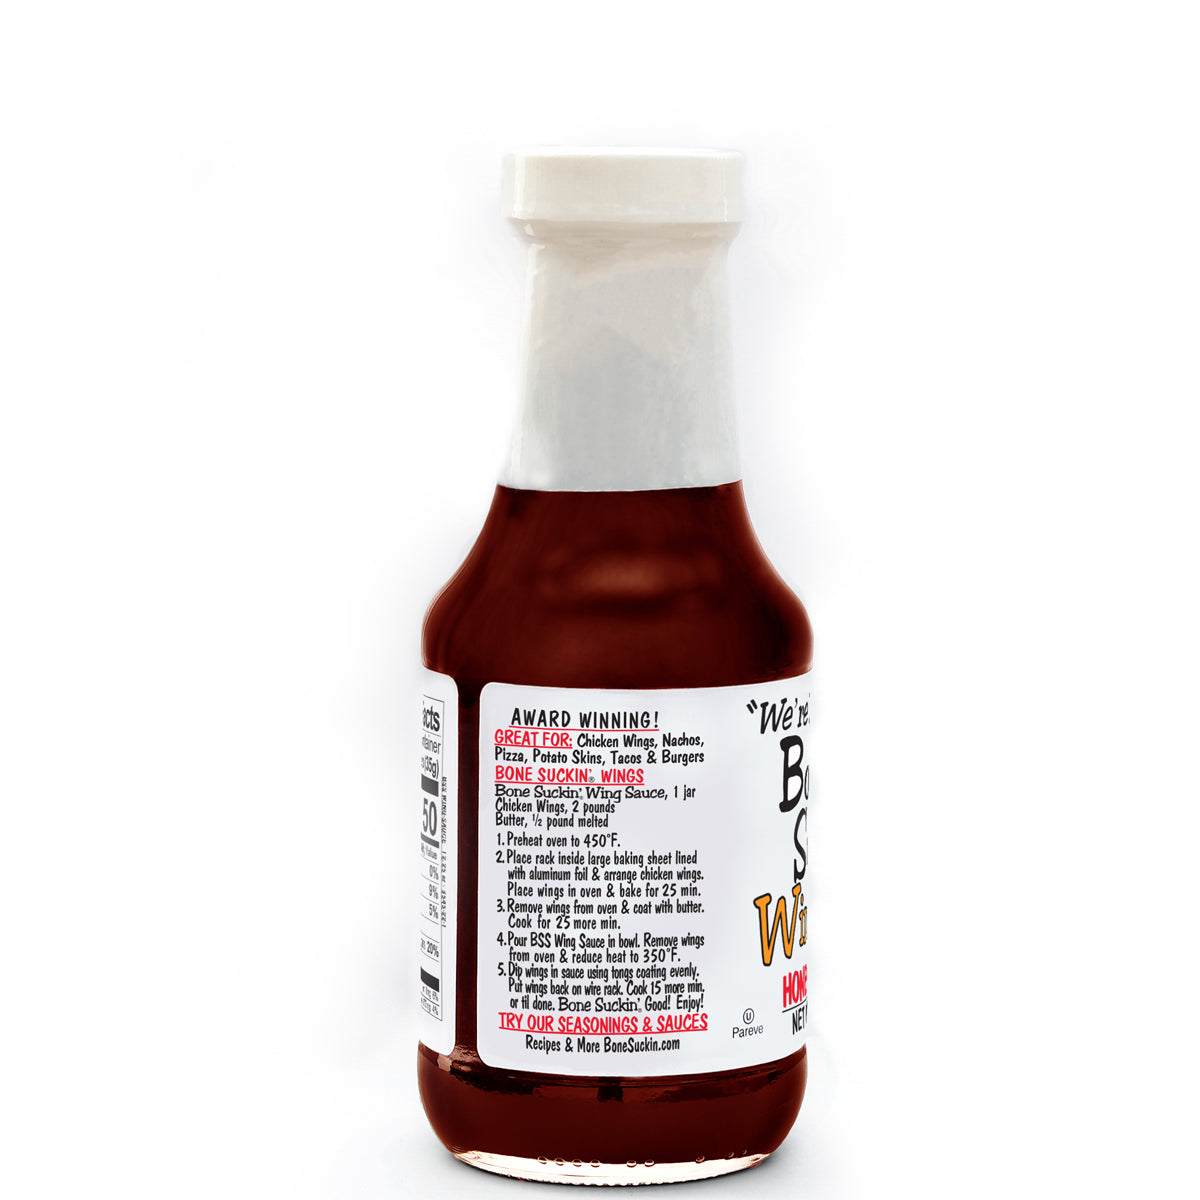 Bone Suckin'® Wing Sauce, Honey & Habanero, 12.25 oz., Side of Label with Recipe